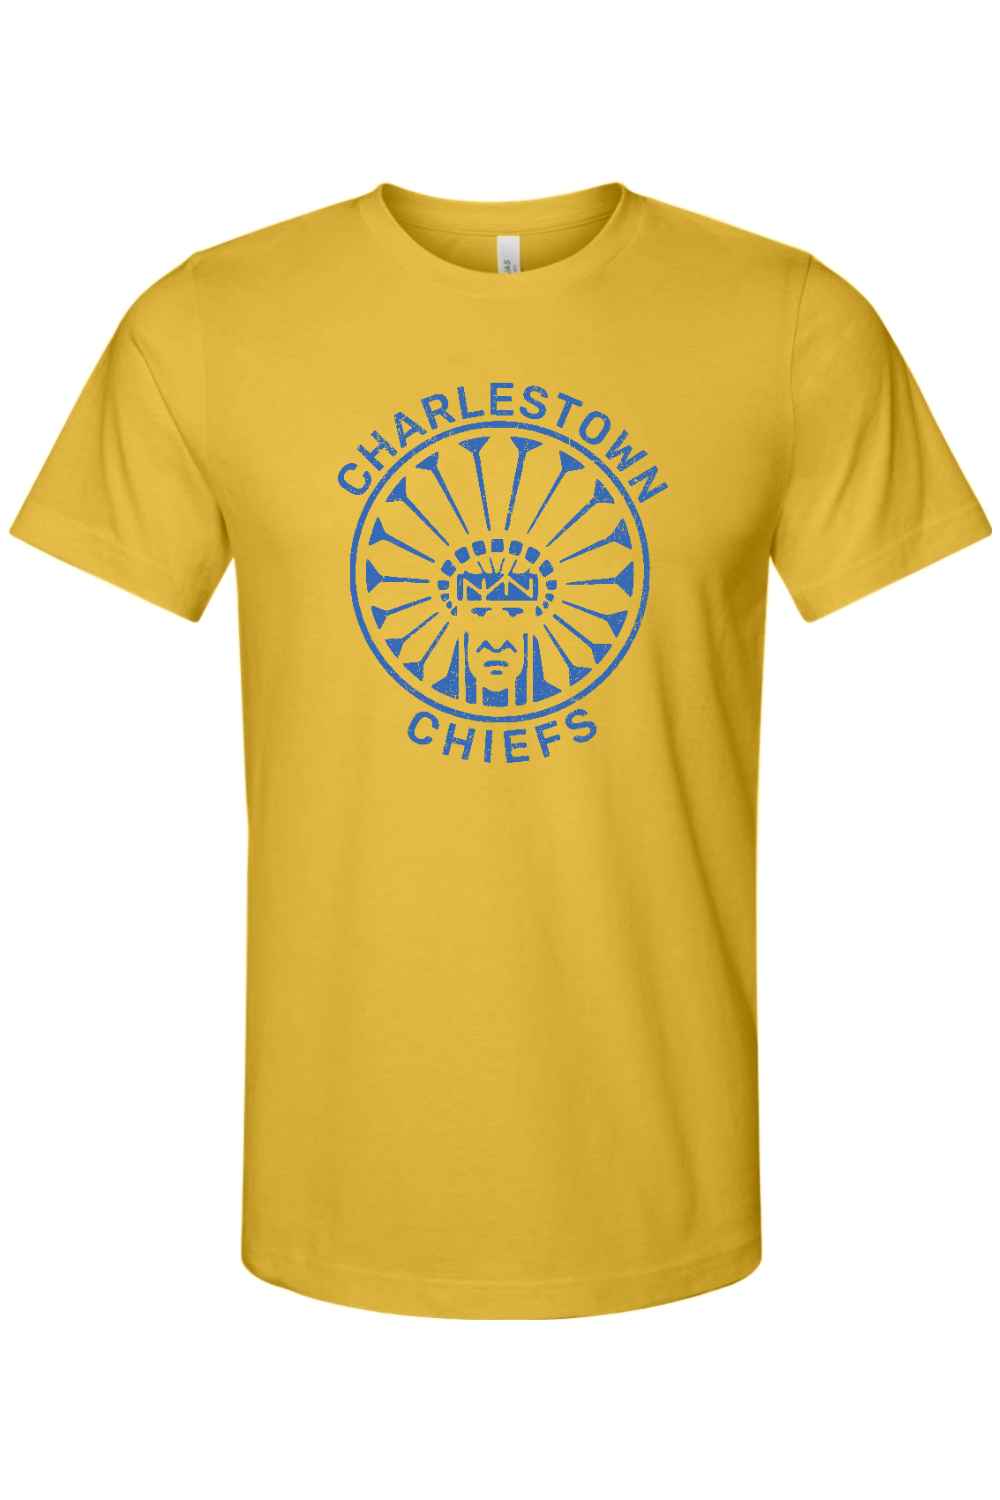 Charlestown Chiefs - Retro Logo - Yinzylvania